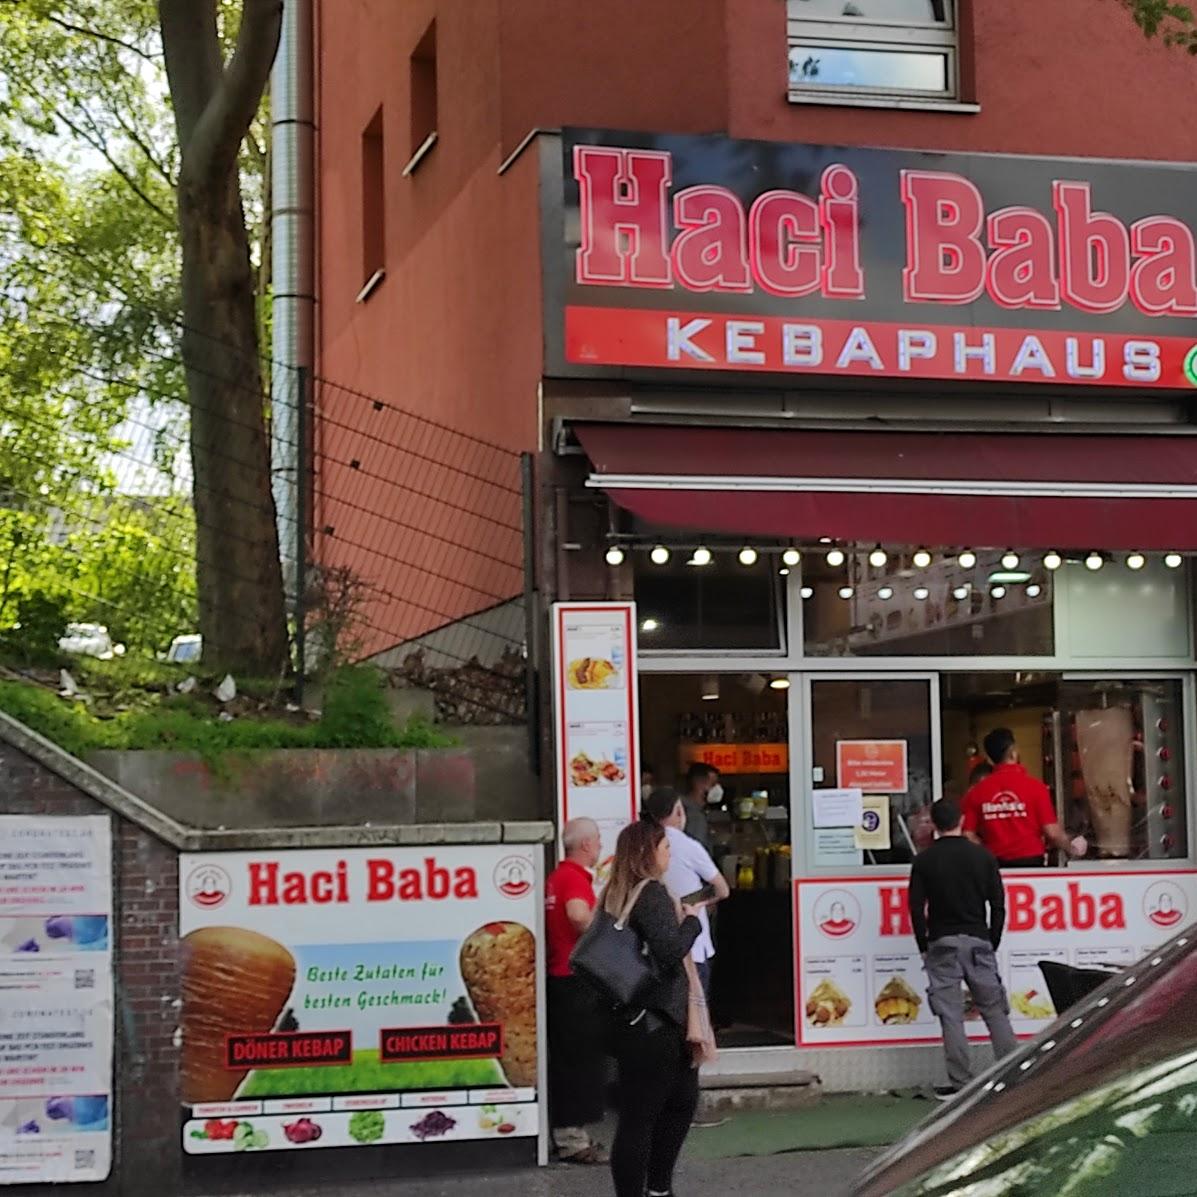 Restaurant "Haci Baba Kebabhaus Berlin" in Berlin